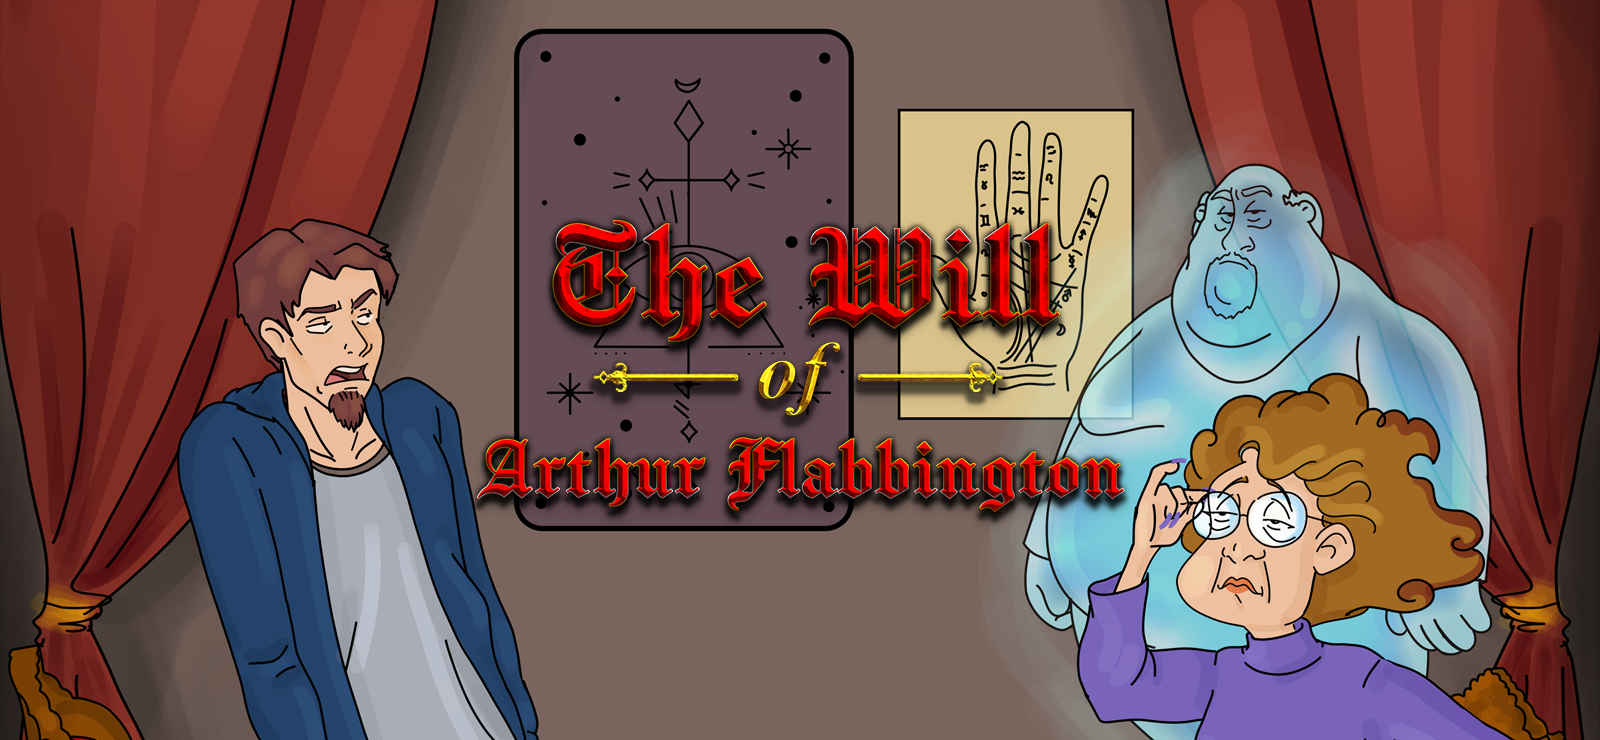 The Will Of Arthur Flabbington